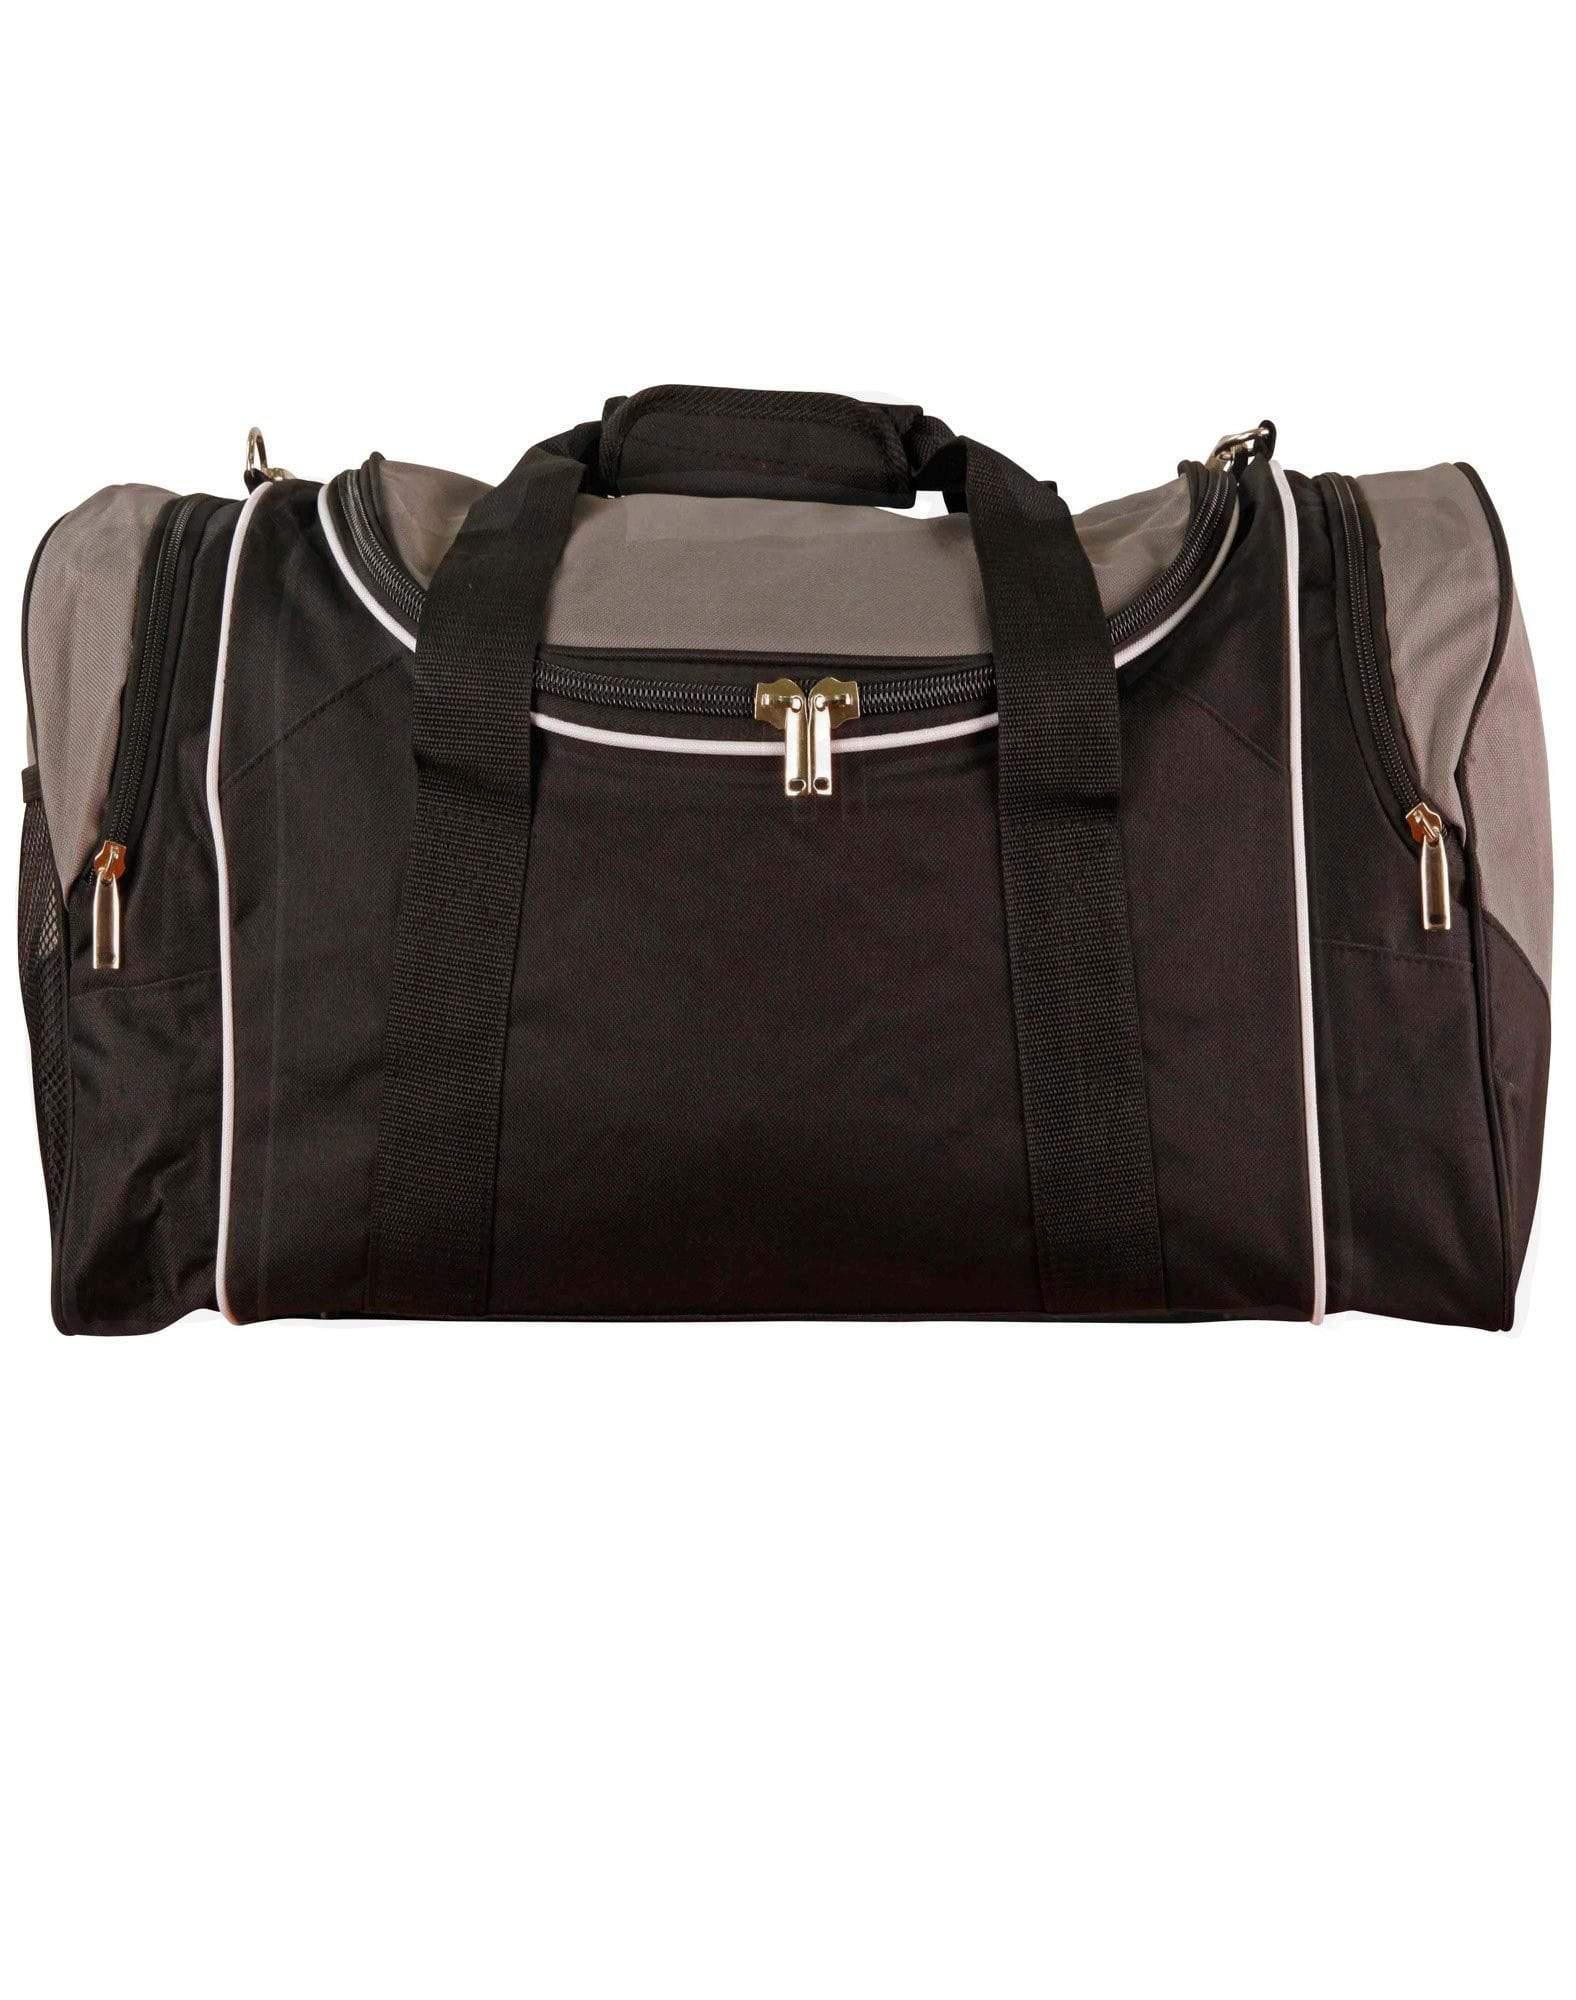 Winner Sports/ Travel Bag B2020 Active Wear Winning Spirit Black/White/Grey "(w)65cm x (h)32cm x (d)27cm, 56.2 Litres Capacity" 